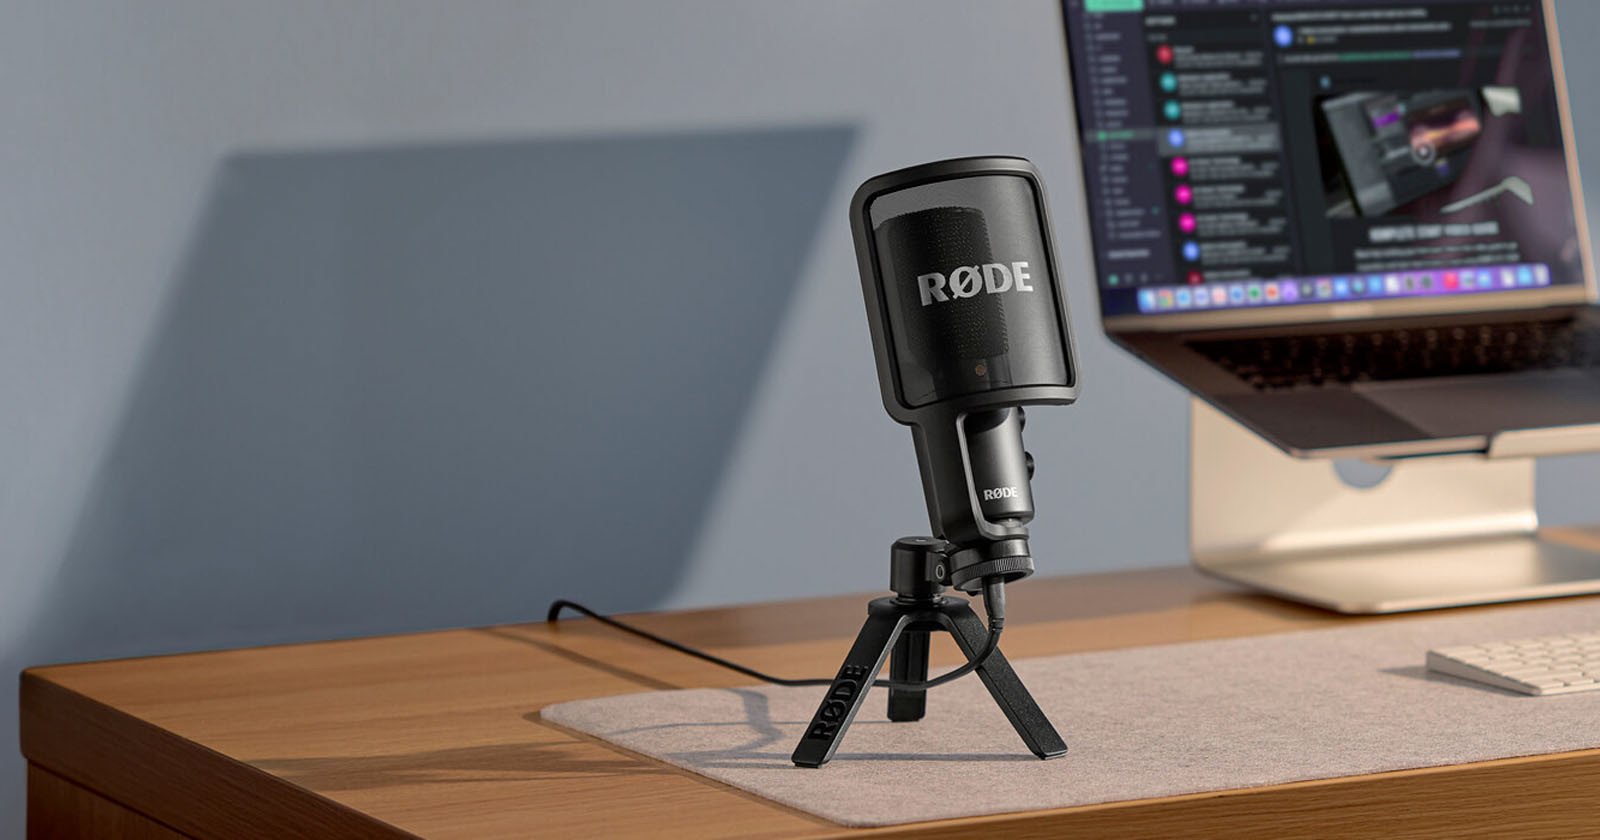  rode nt-usb update its already excellent desktop mic 